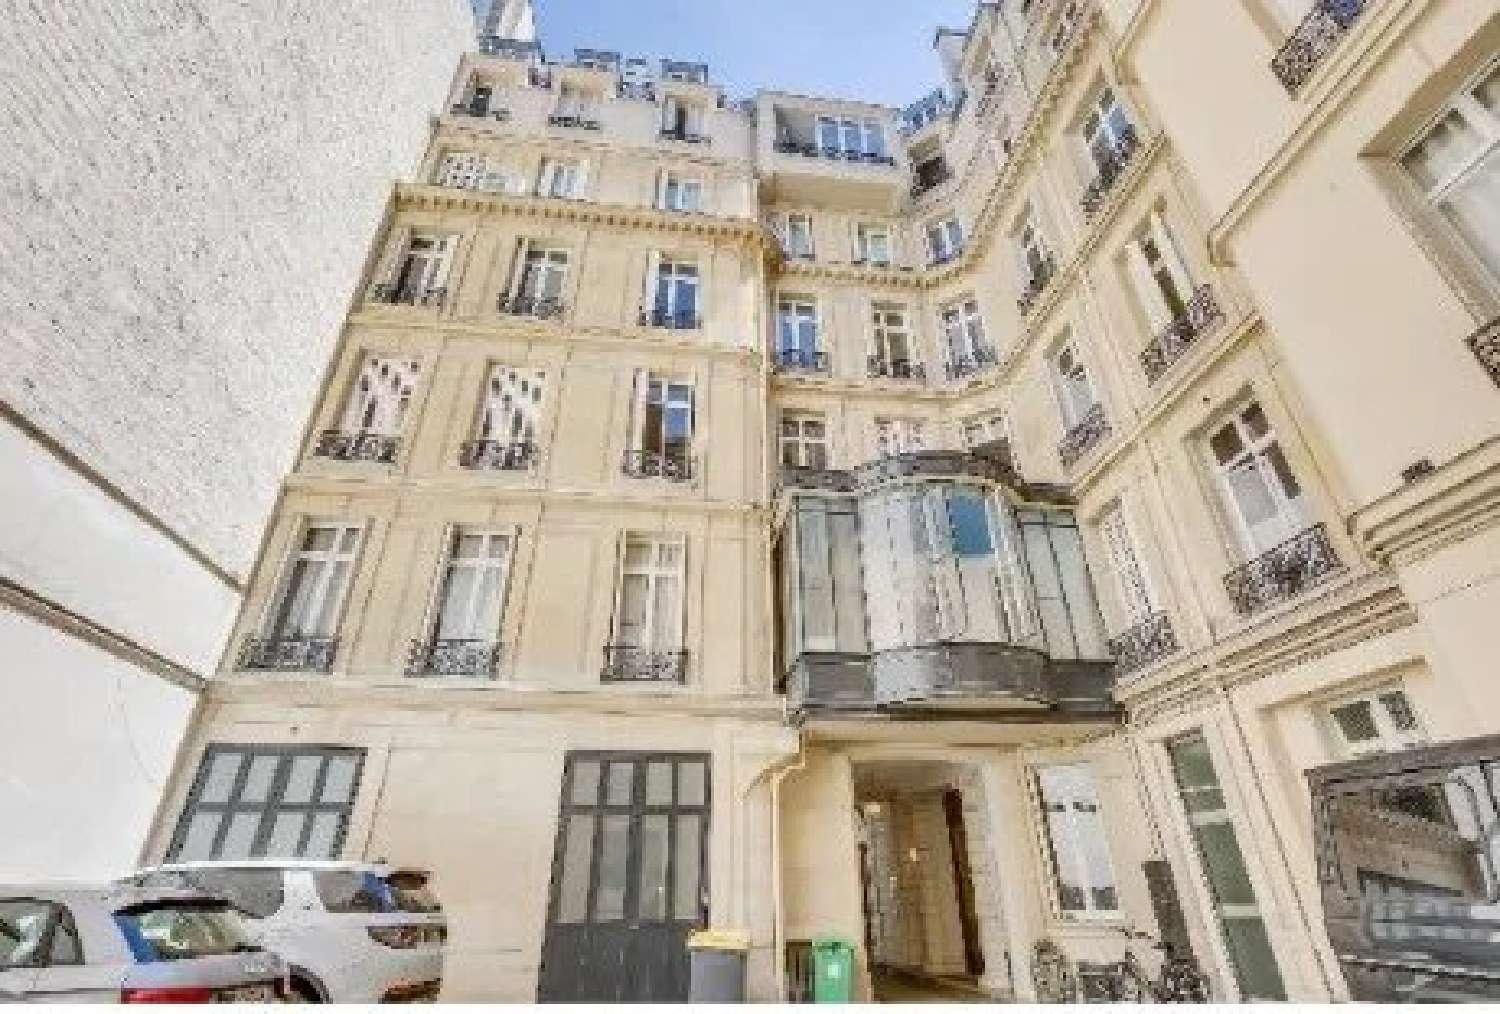  te koop appartement Paris 17e Arrondissement Parijs (Seine) 4